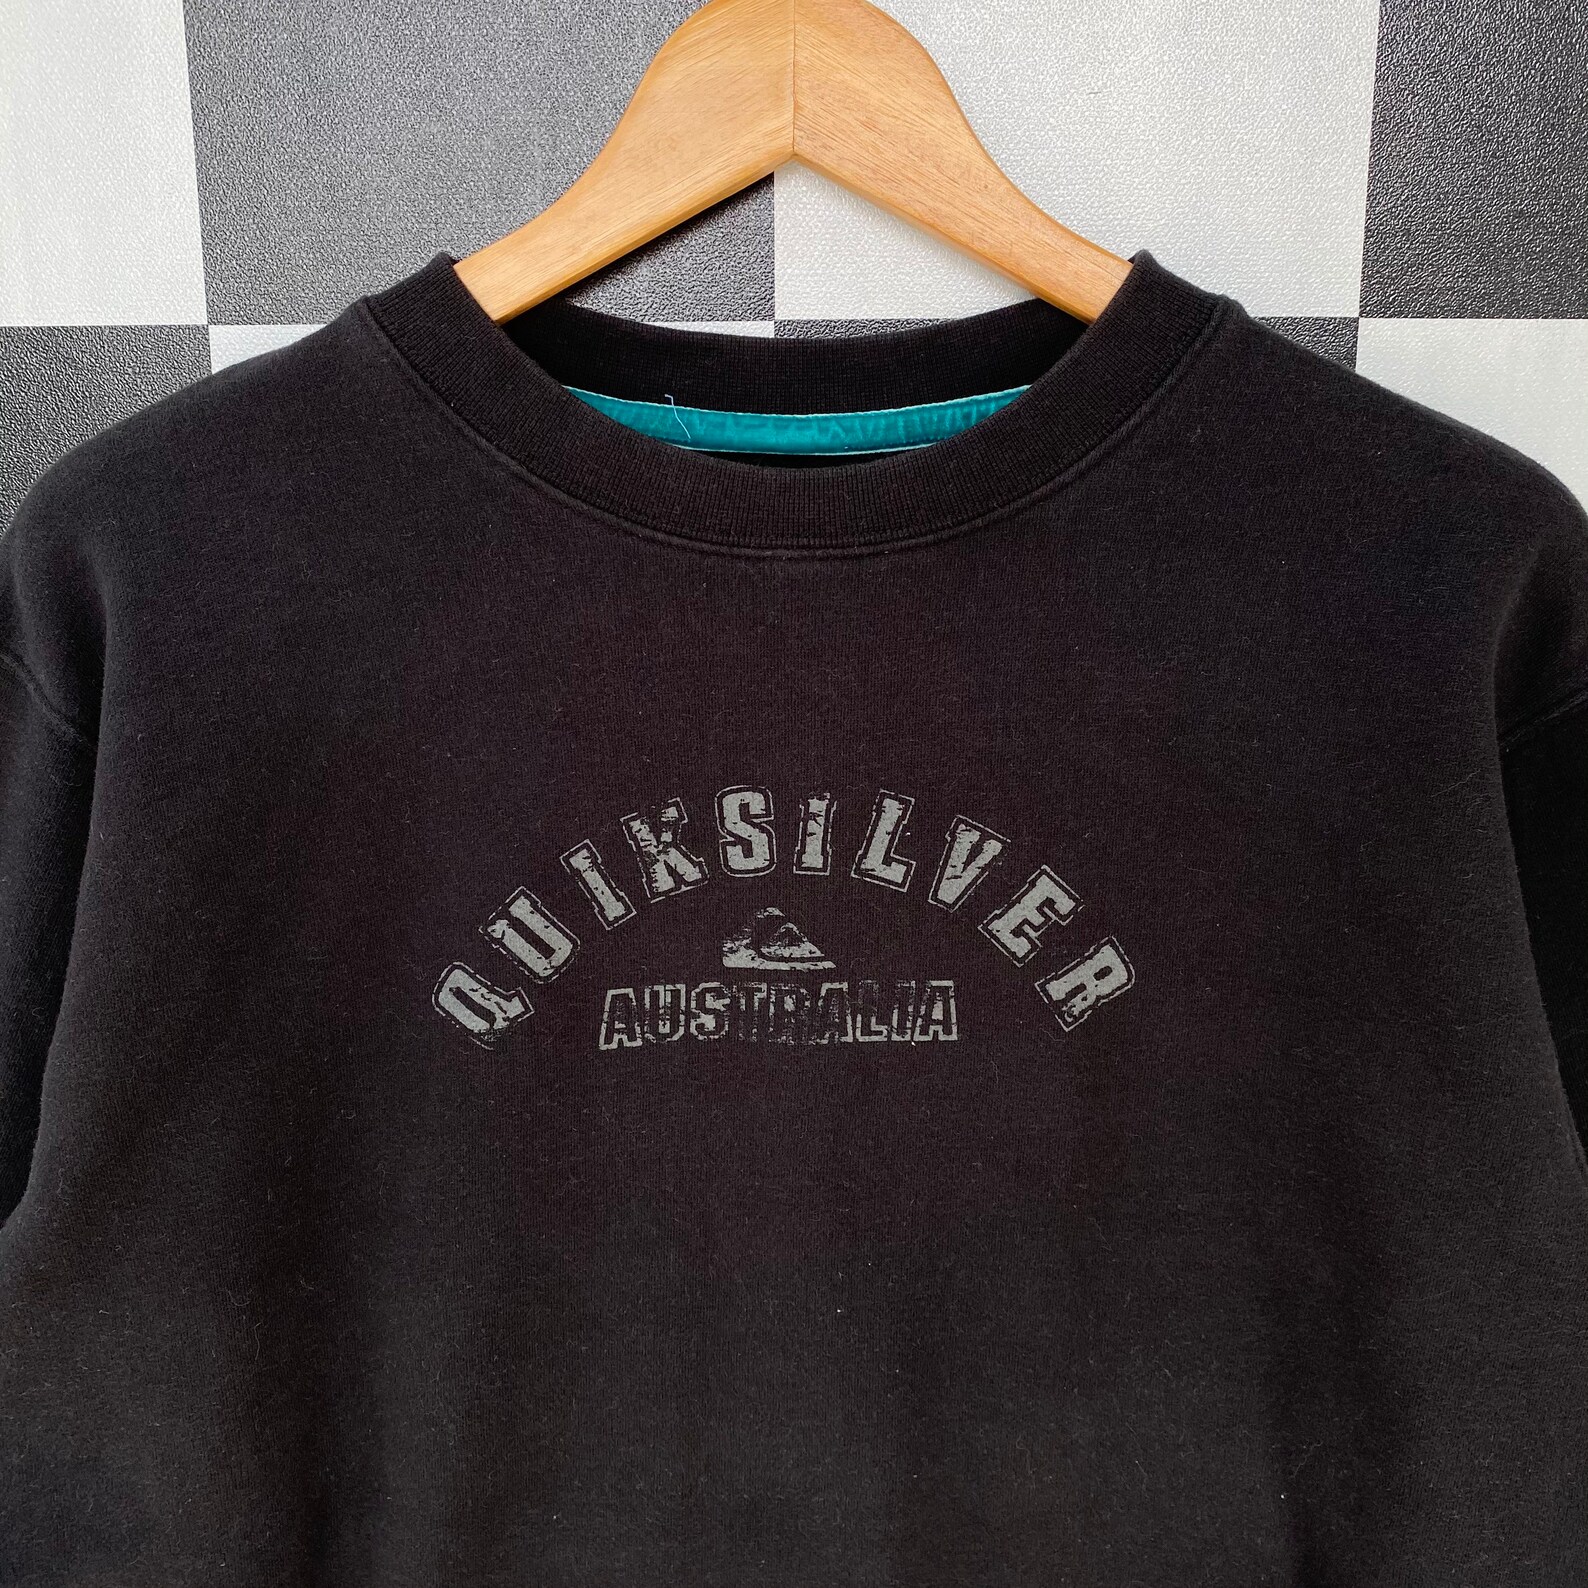 Quiksilver Australia Sweatshirt Jumper Quiksilver Crewneck Big | Etsy